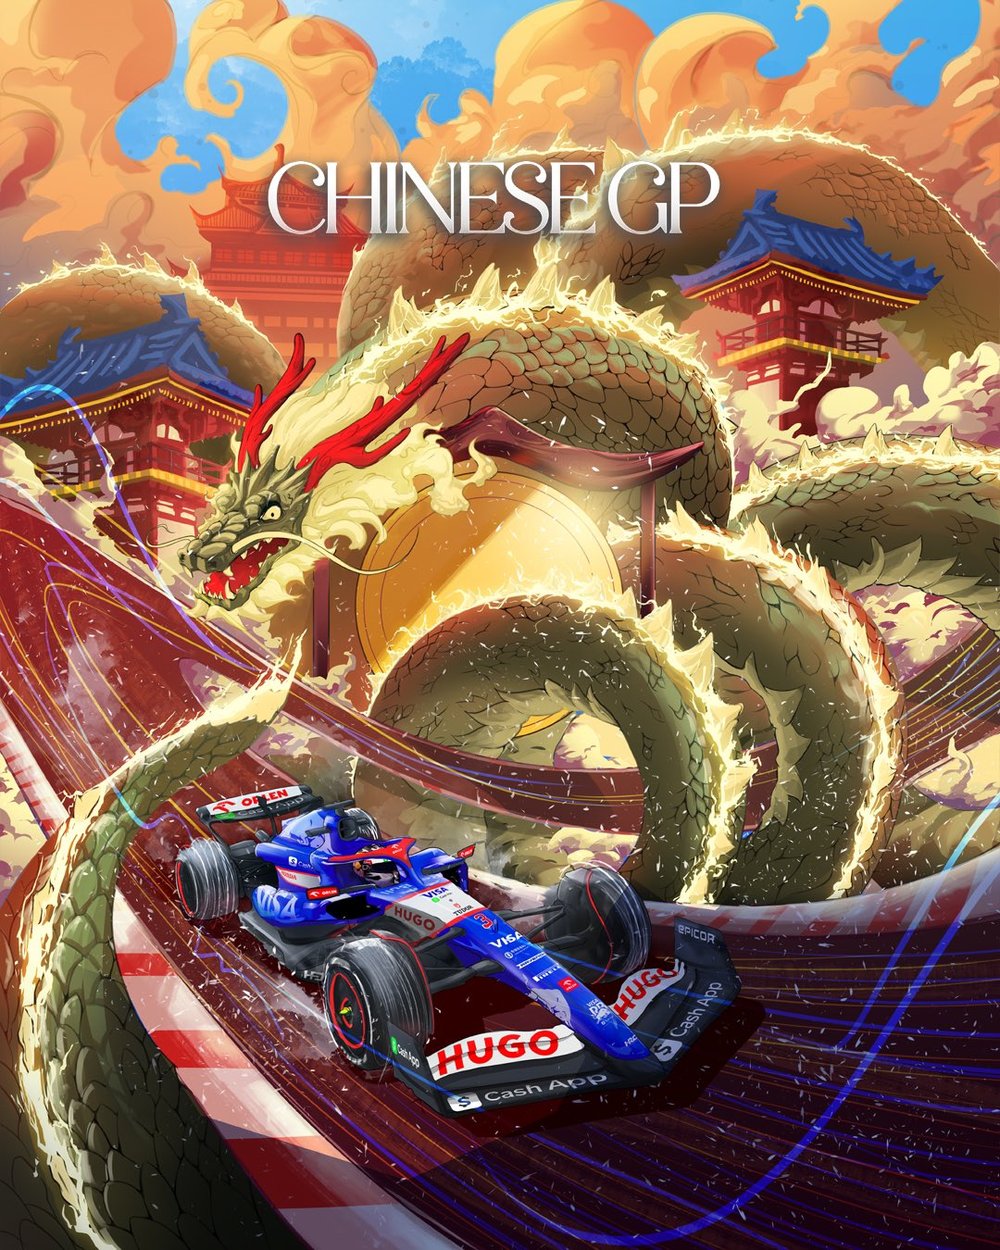 1 Visa Cash App F1 Team Chinese GP poster 1.jpg